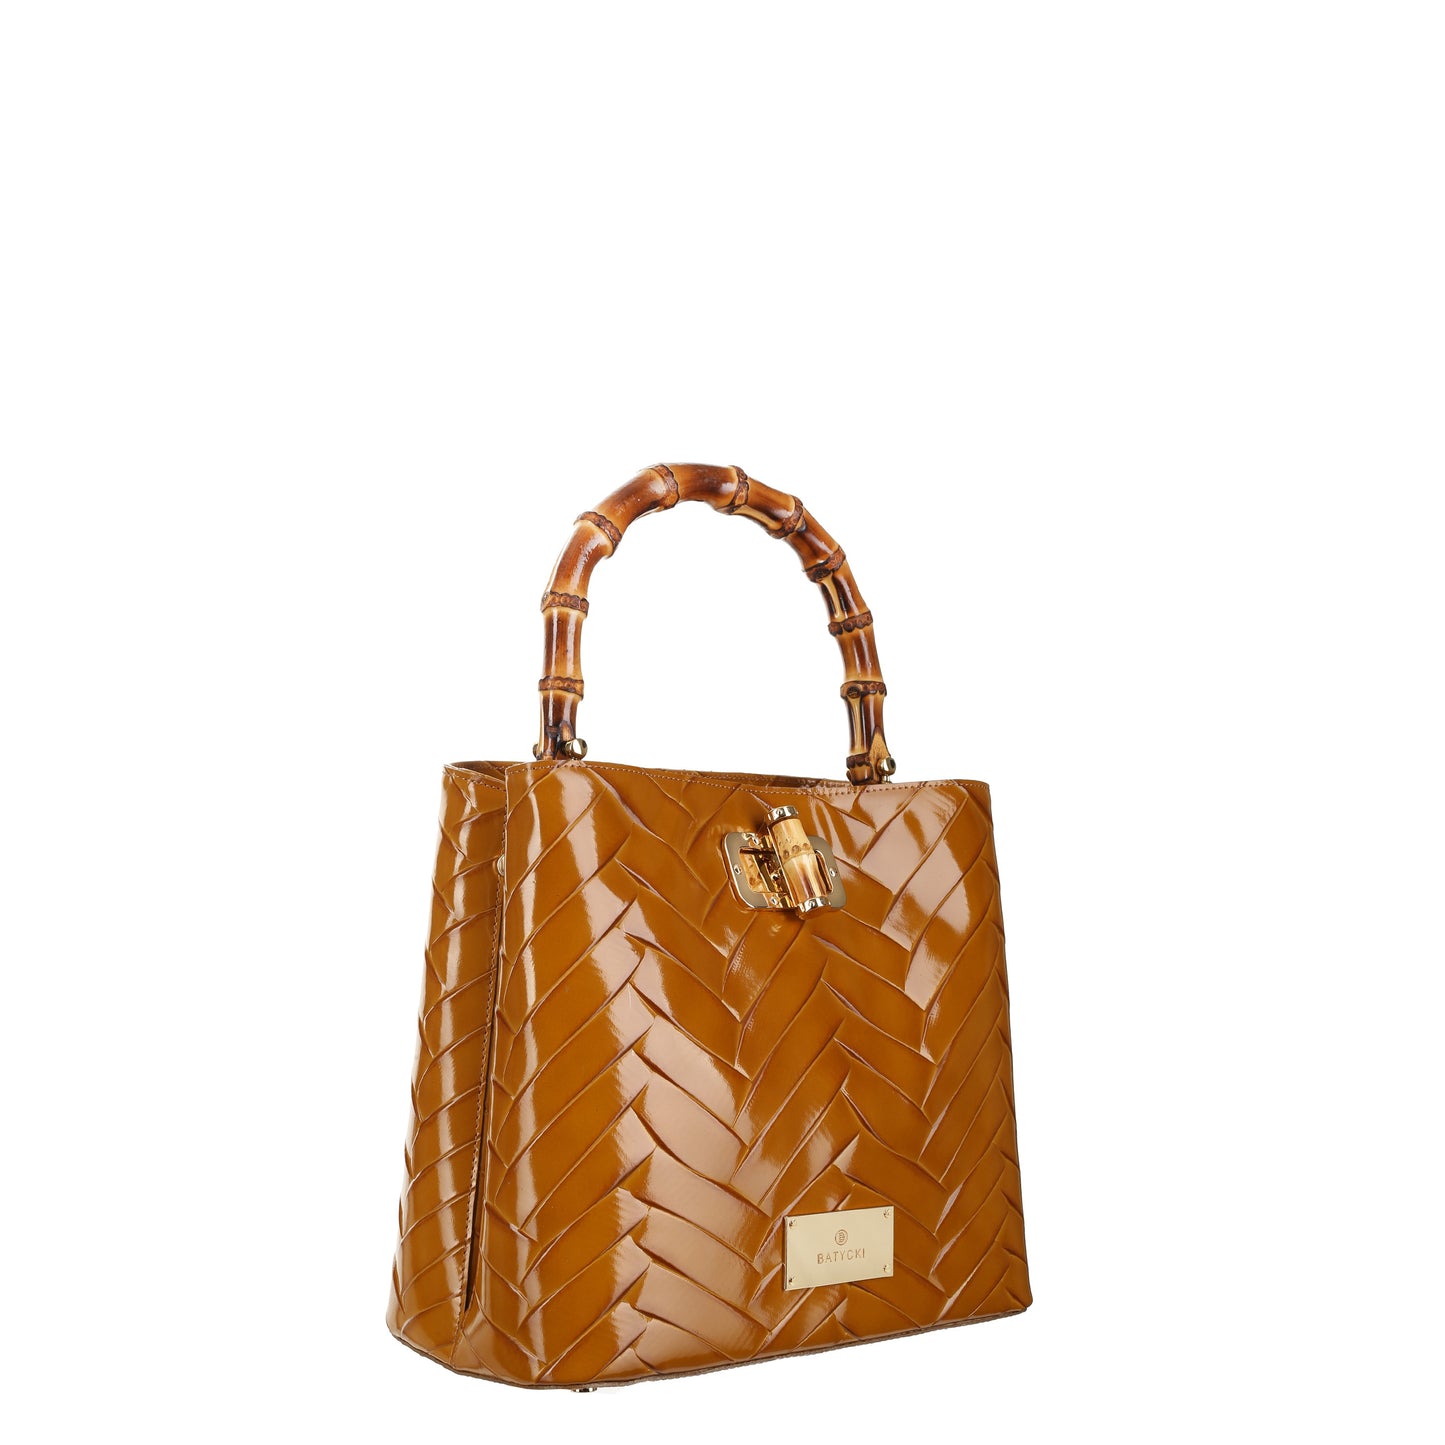 STELLA BRAID HONEY women's leather handbag